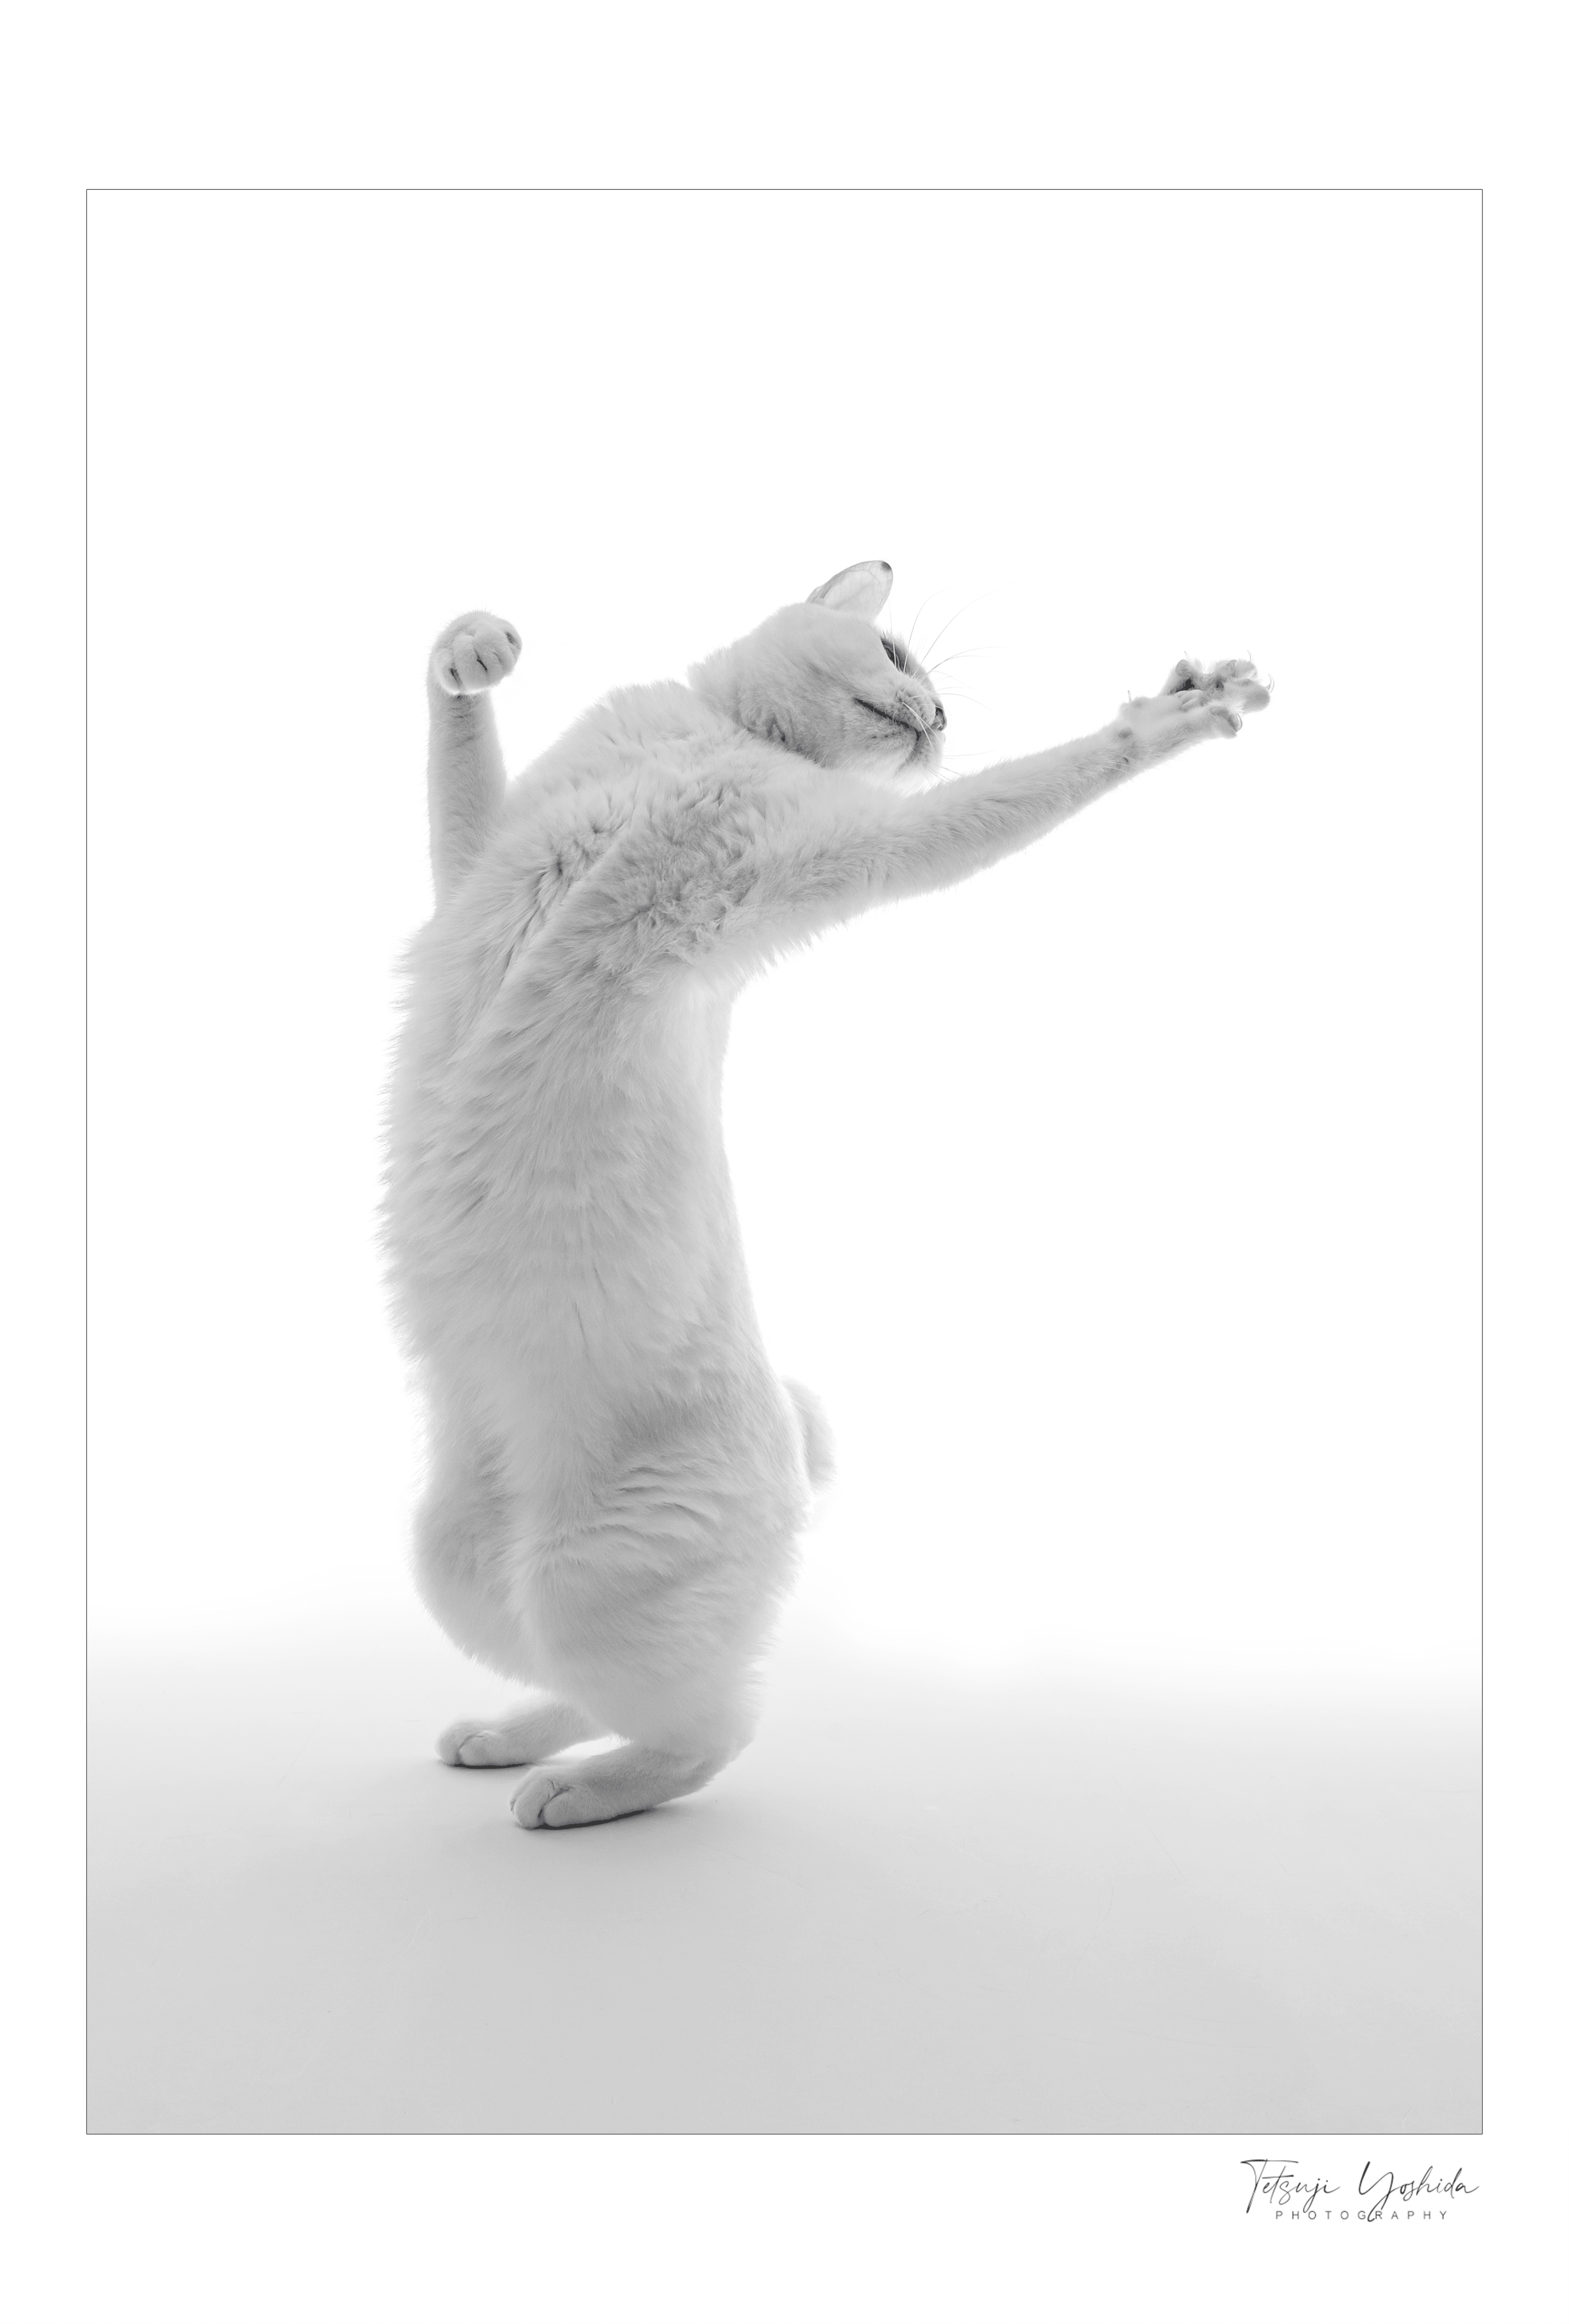 Teto the white cat "Dancing like MJ"